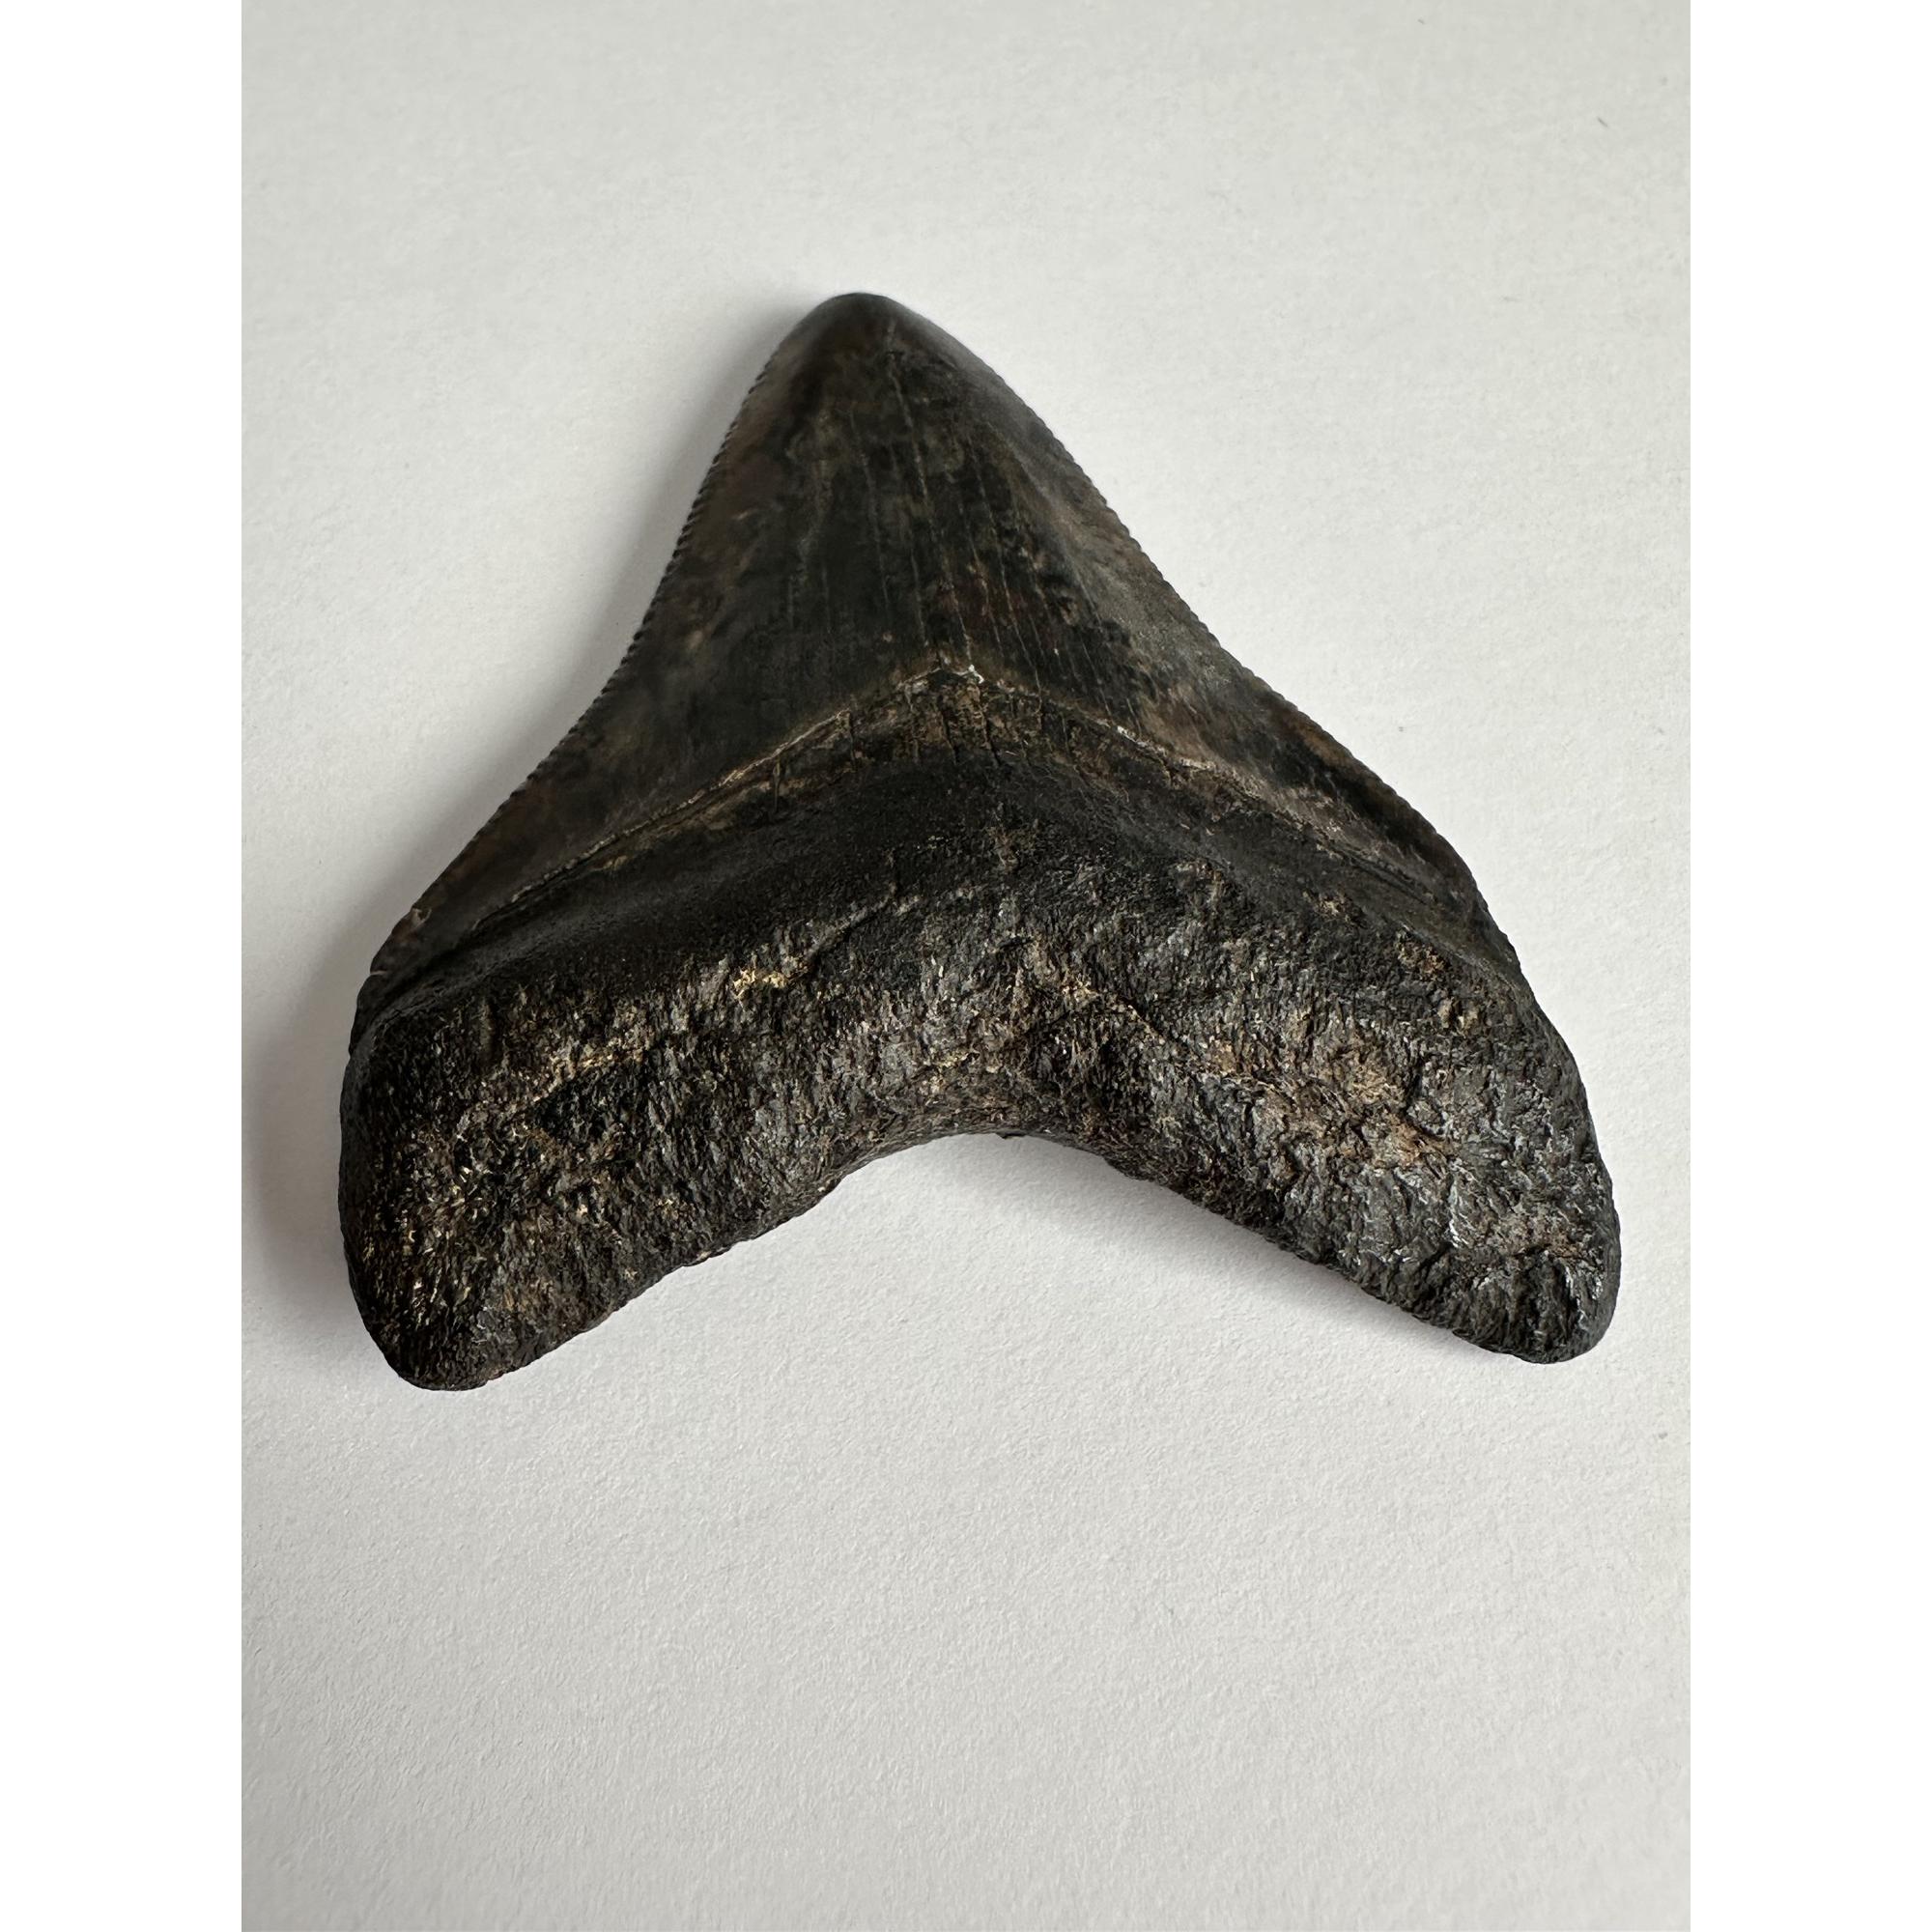 Megalodon Tooth, Georgia 2 1/3″ Prehistoric Online